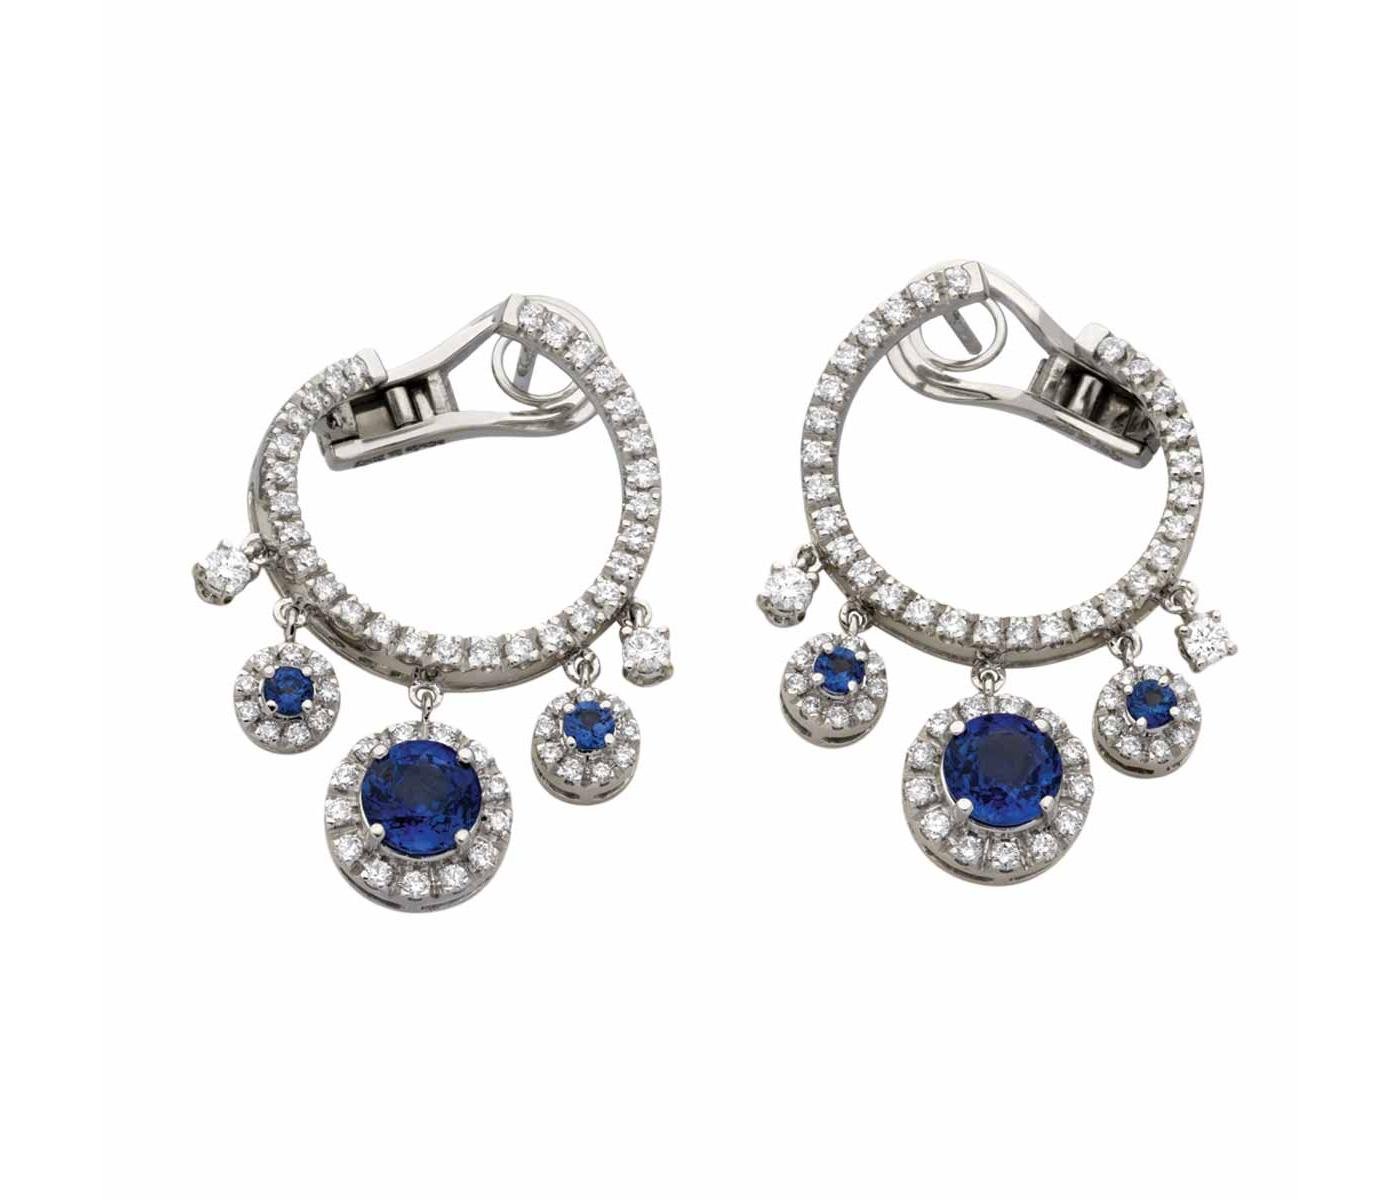 Earrings by Staurino